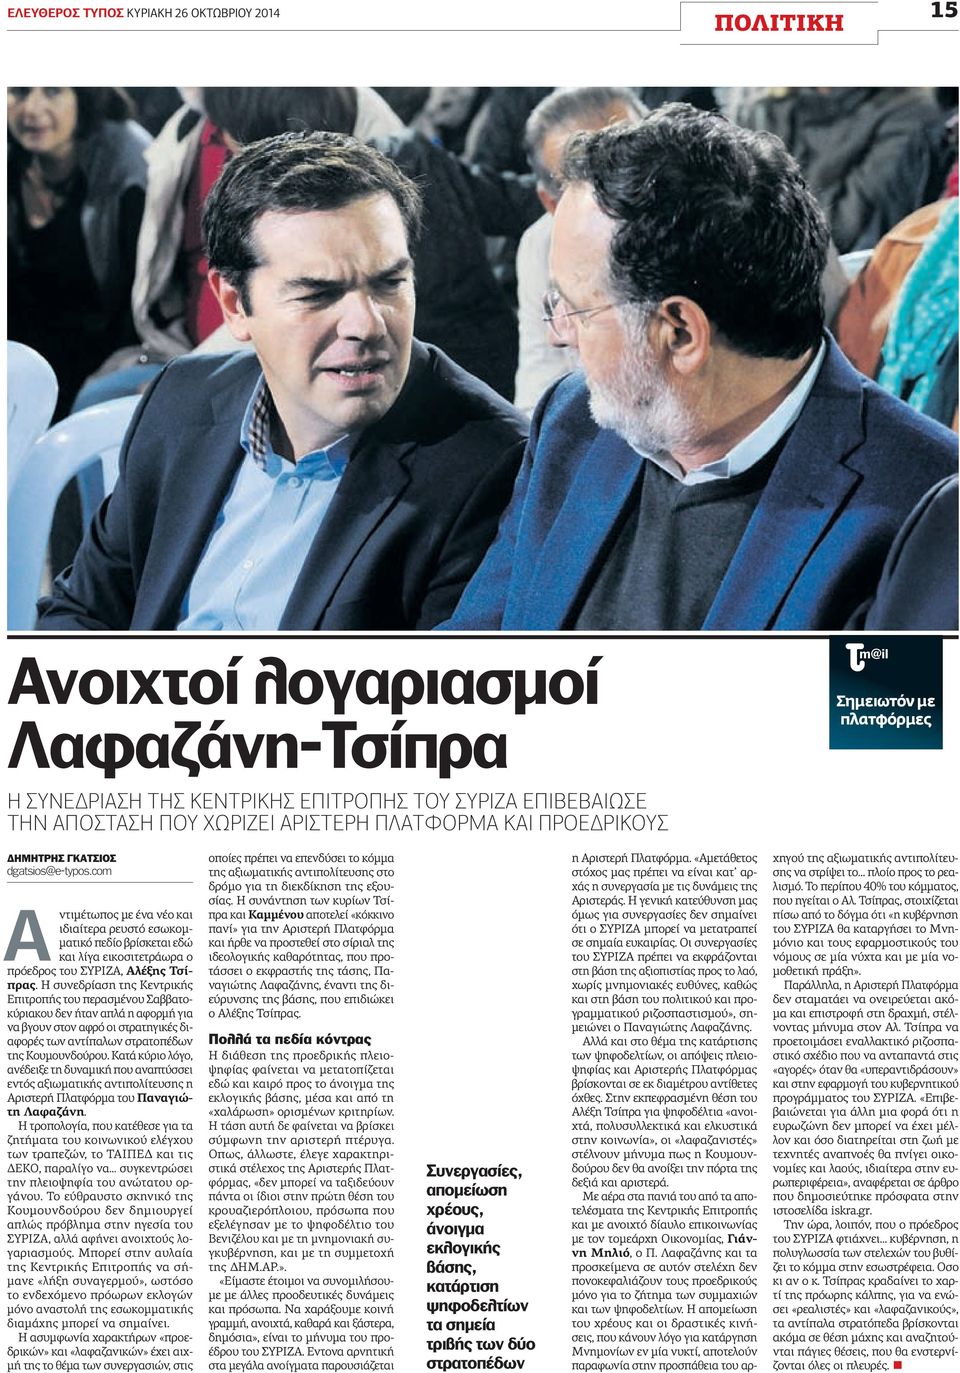 com Αντιμέτωπος με ένα νέο και ιδιαίτερα ρευστό εσωκομματικό πεδίο βρίσκεται εδώ και λίγα εικοσιτετράωρα ο πρόεδρος του ΣΥΡΙΖΑ, Αλέξης Τσίπρας.